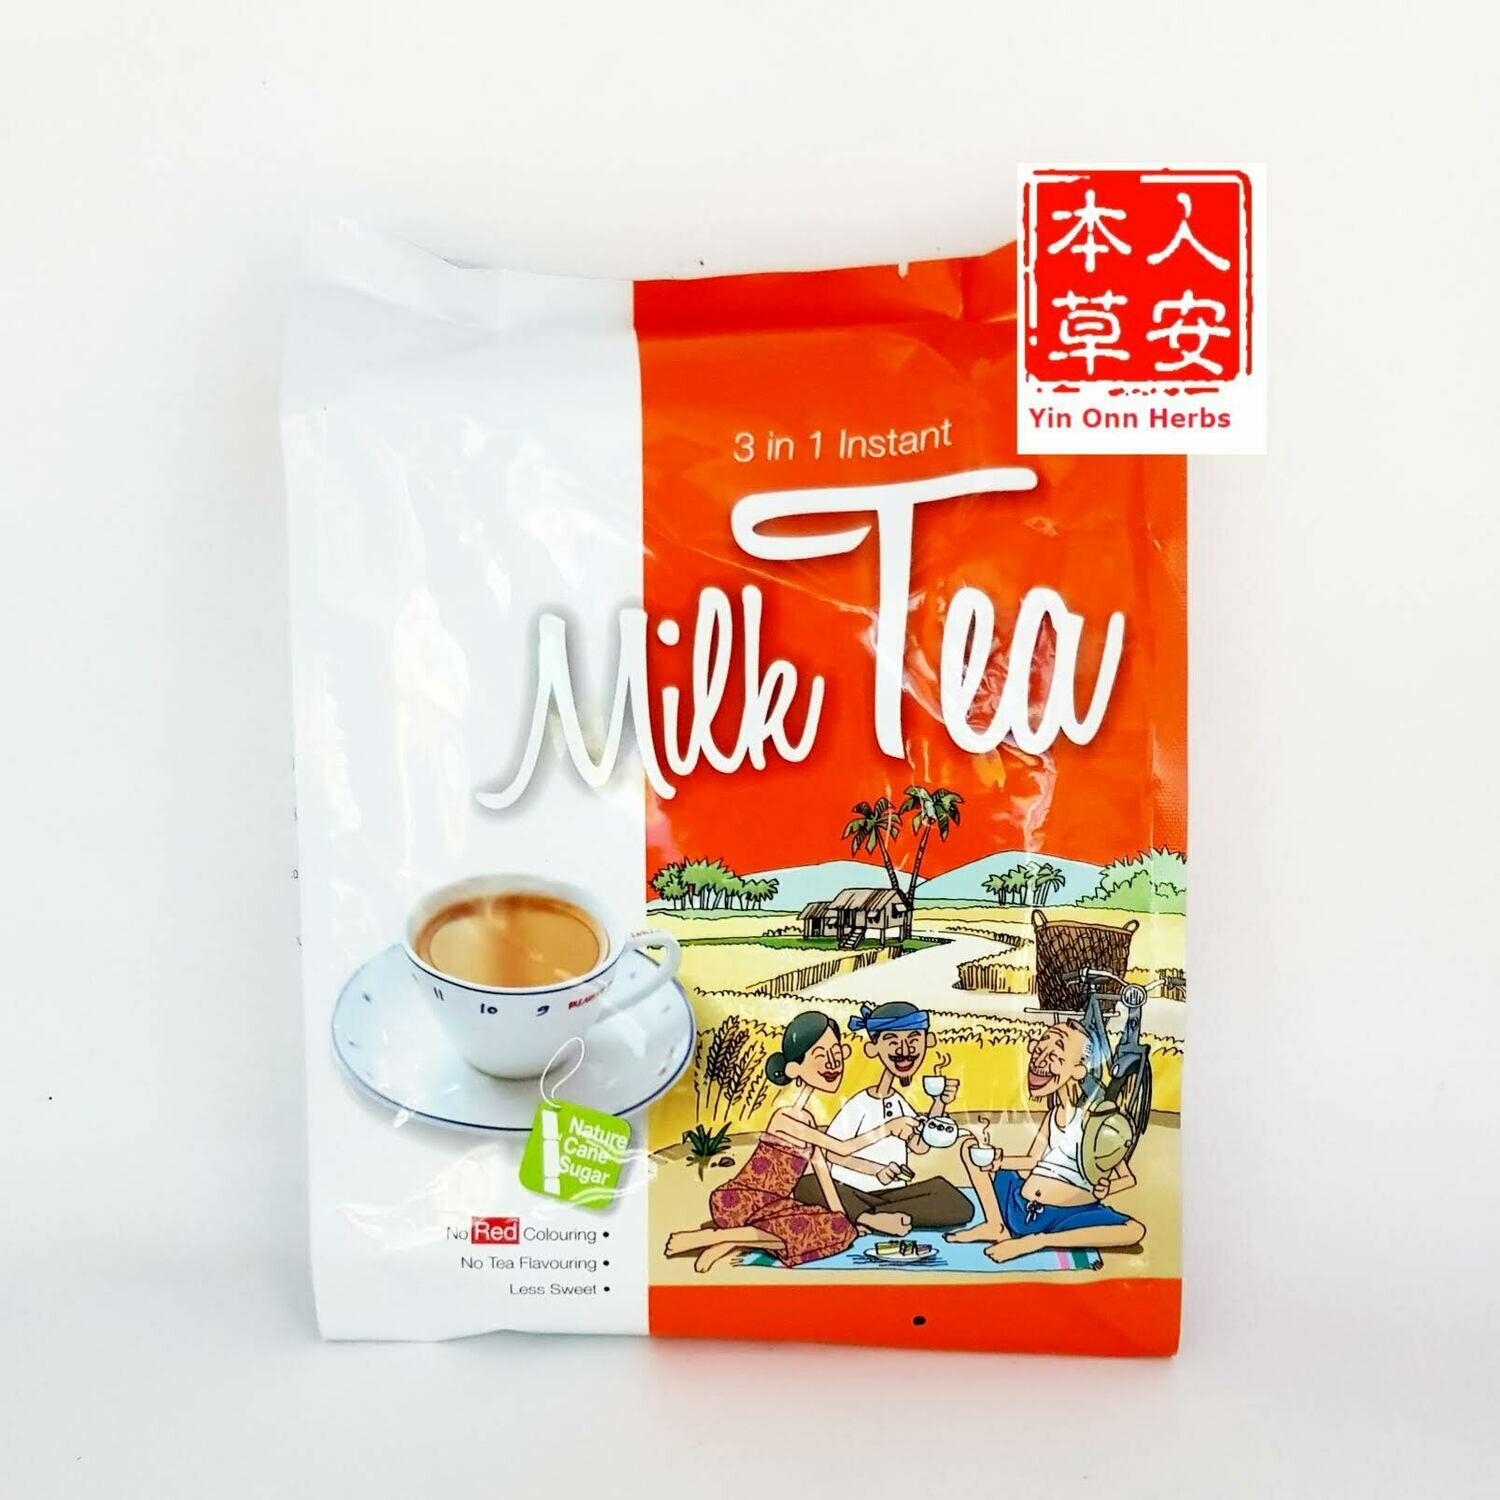 黑王3in1即溶奶茶 35gmX15's Hei Hwang 3in1 Instant Milk Tea